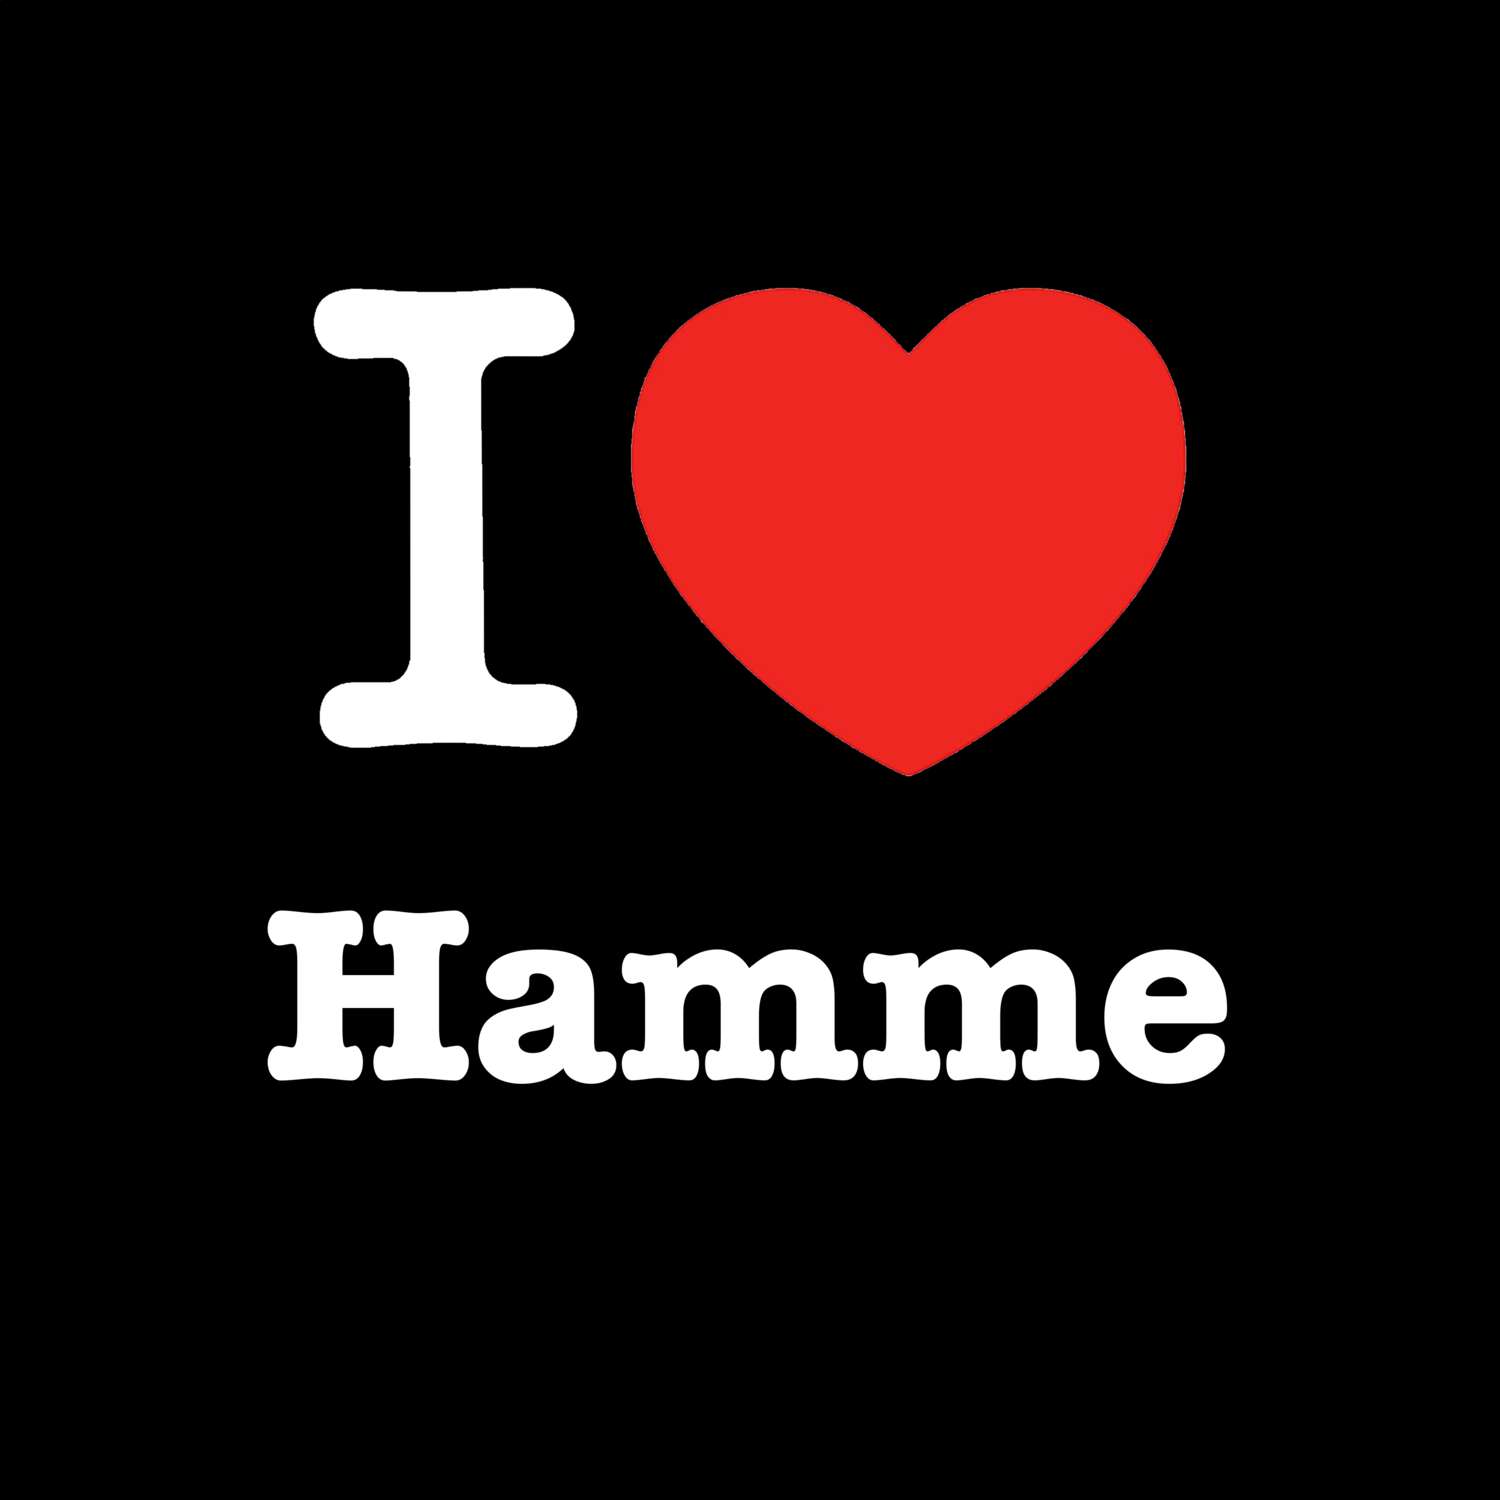 Hamme T-Shirt »I love«